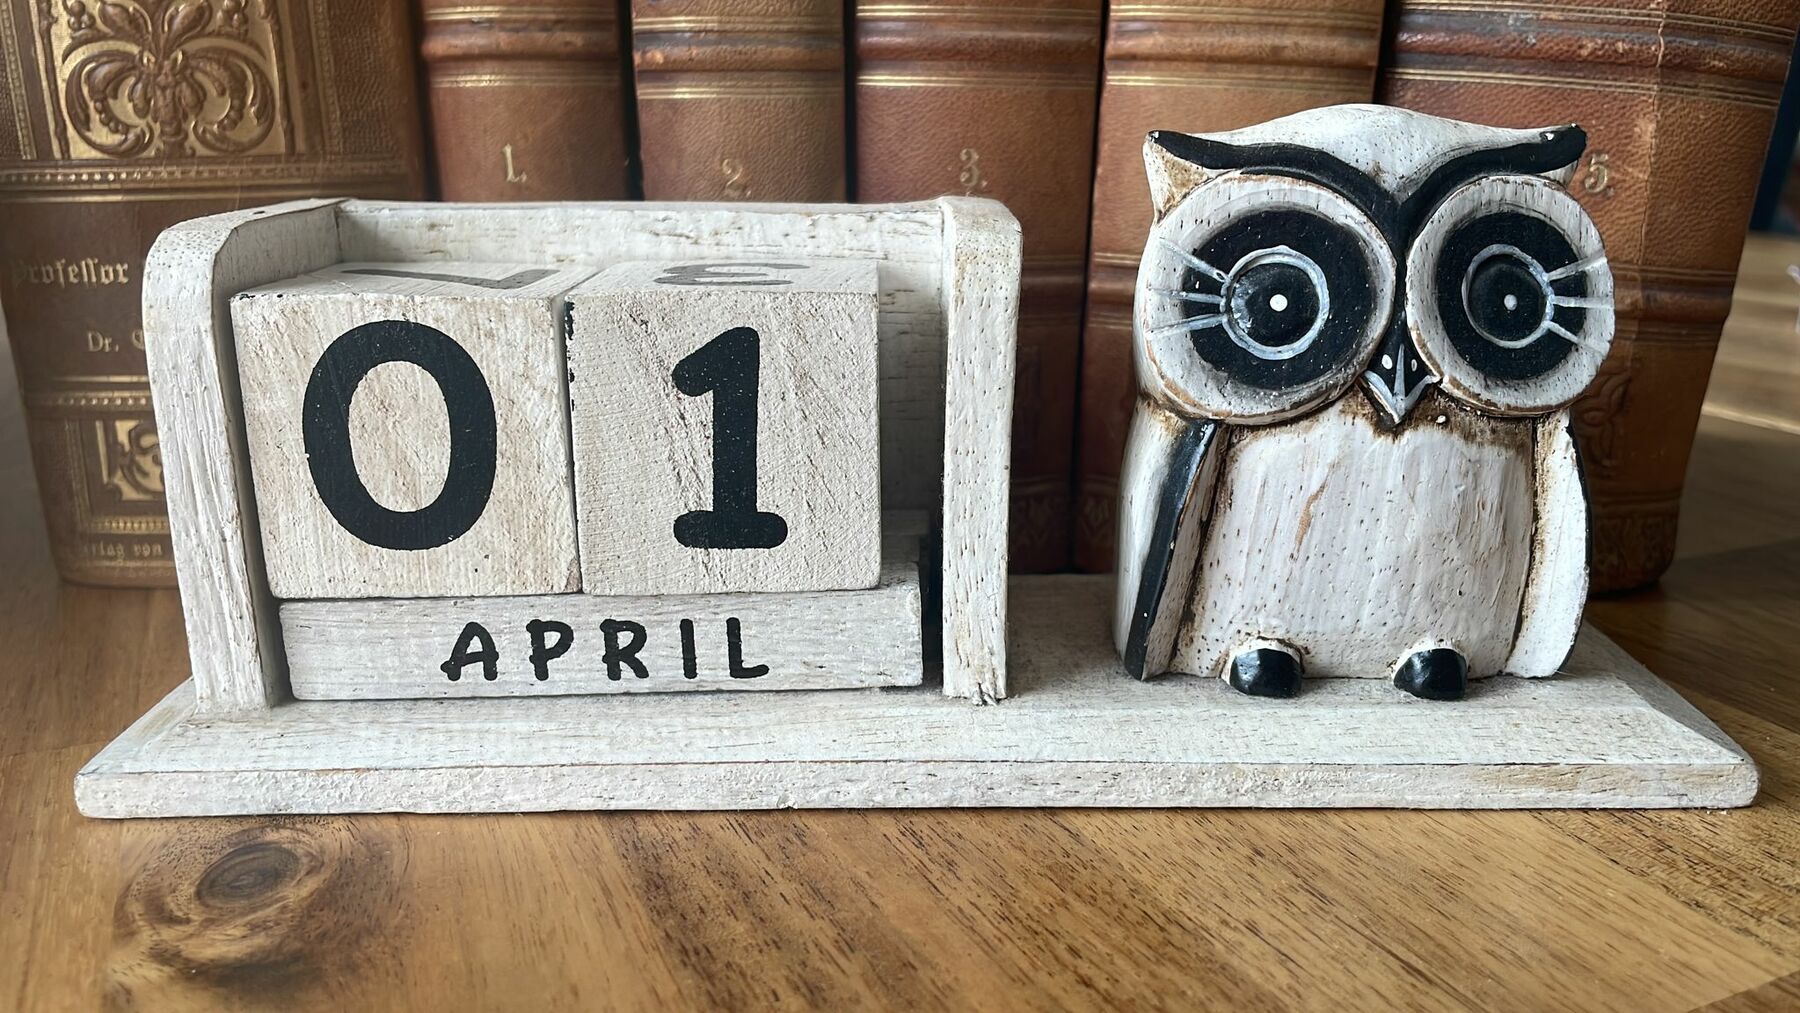 1. April